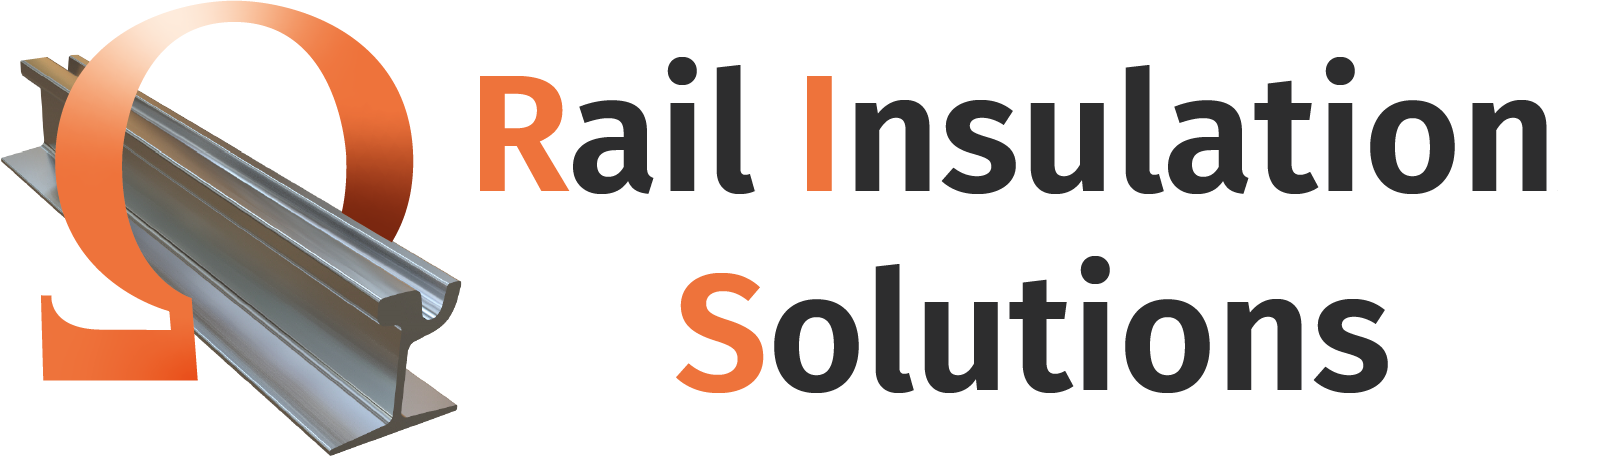 Rail Insulation Solutions